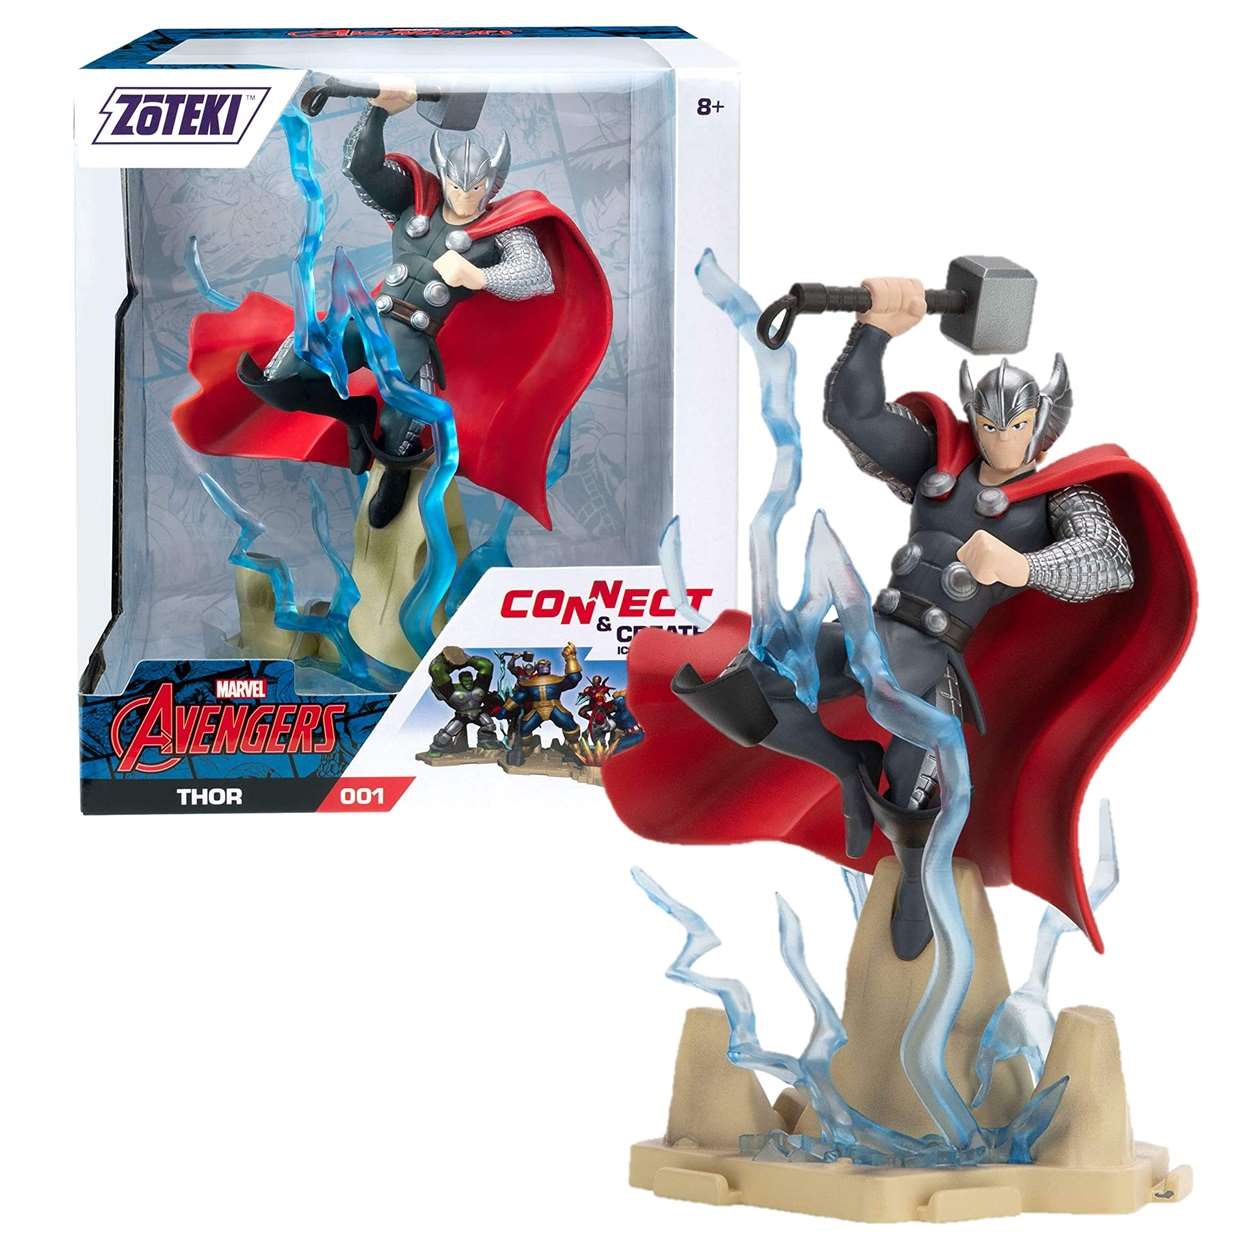 Thor #001 Figura Marvel Avengers Zoteki 4 Pulgadas